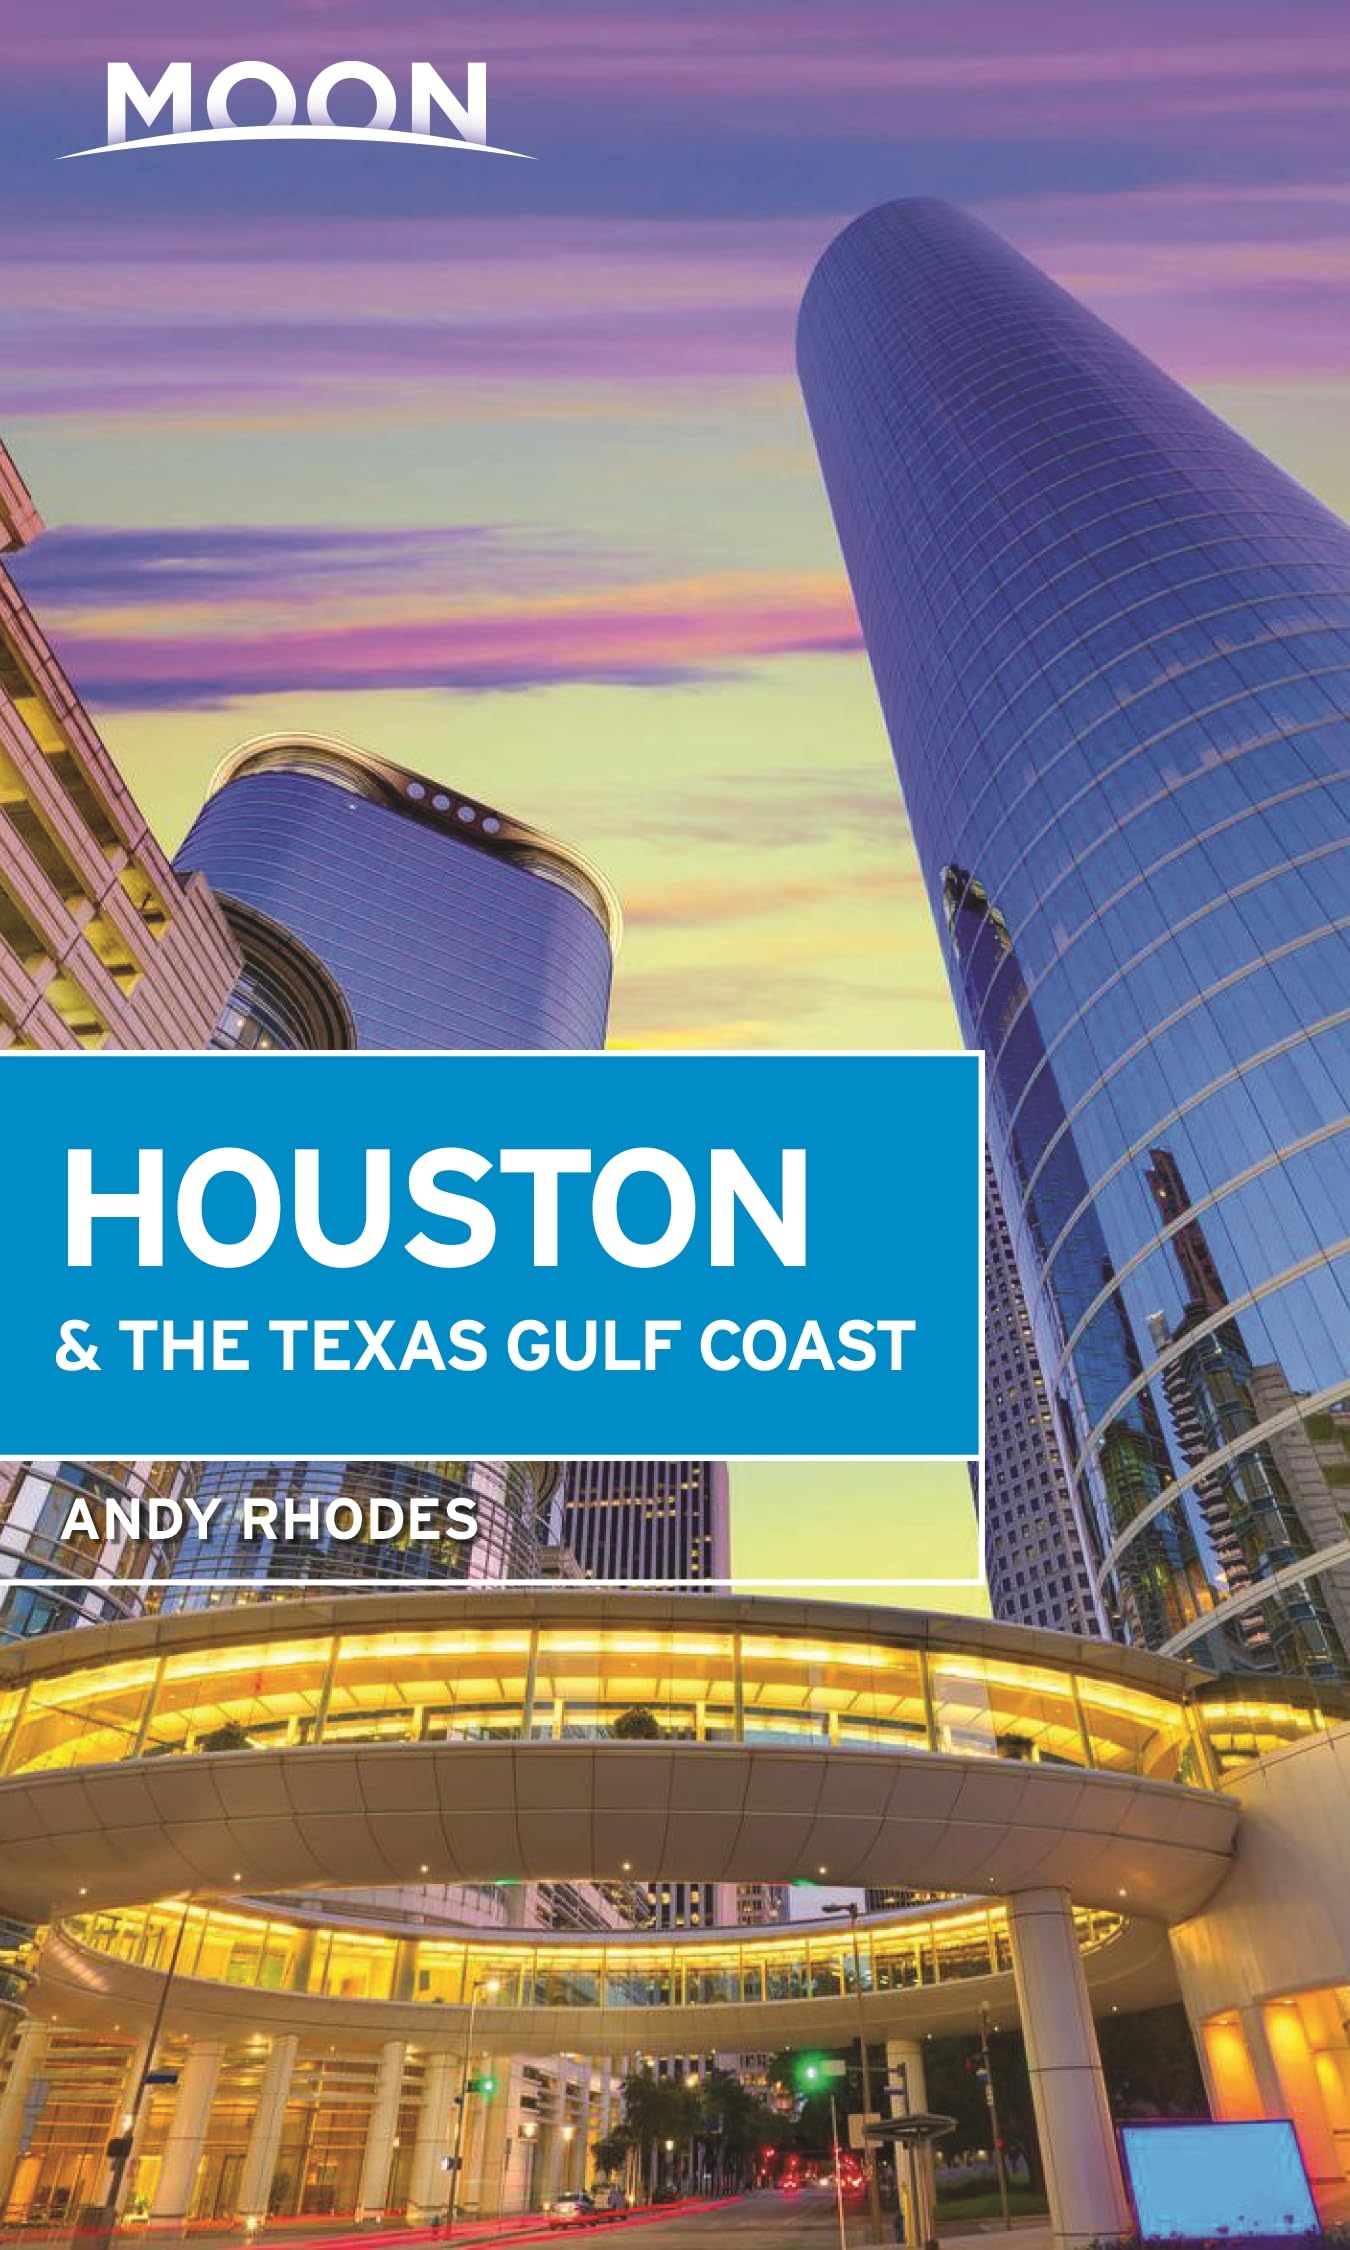 Moon Houston & the Texas Gulf Coast (Travel Guide)